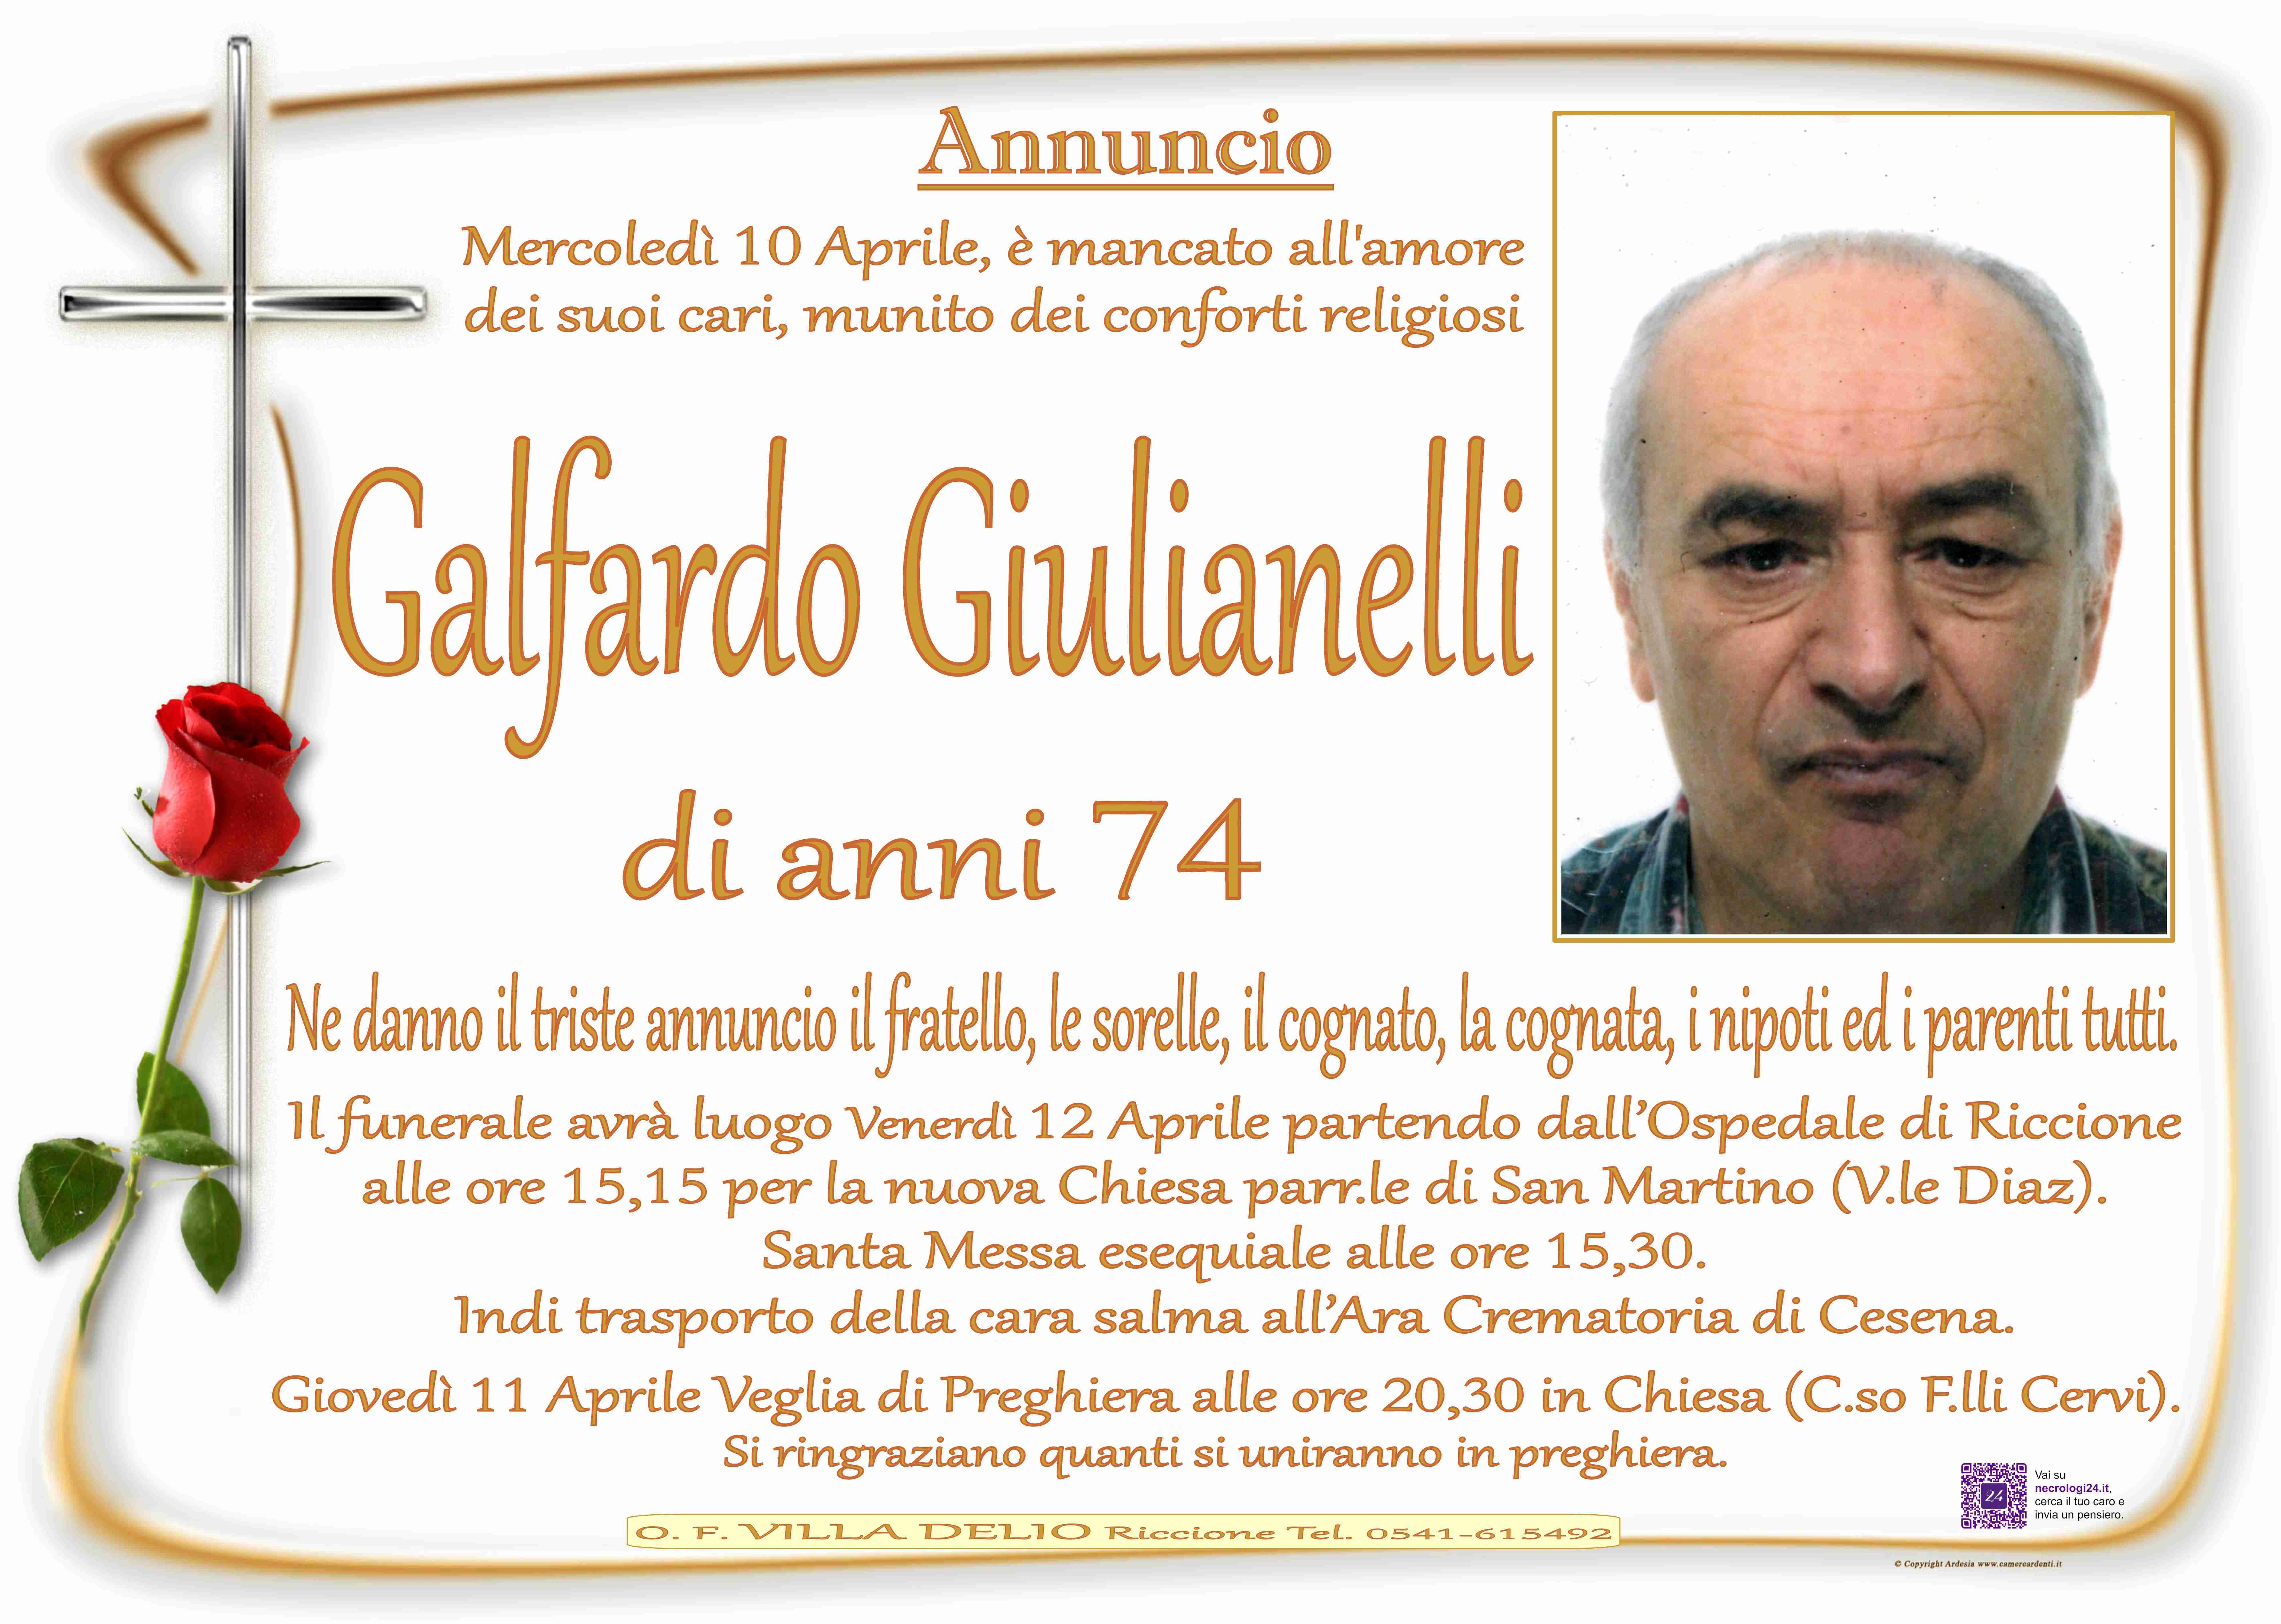 Galfardo Giulianelli